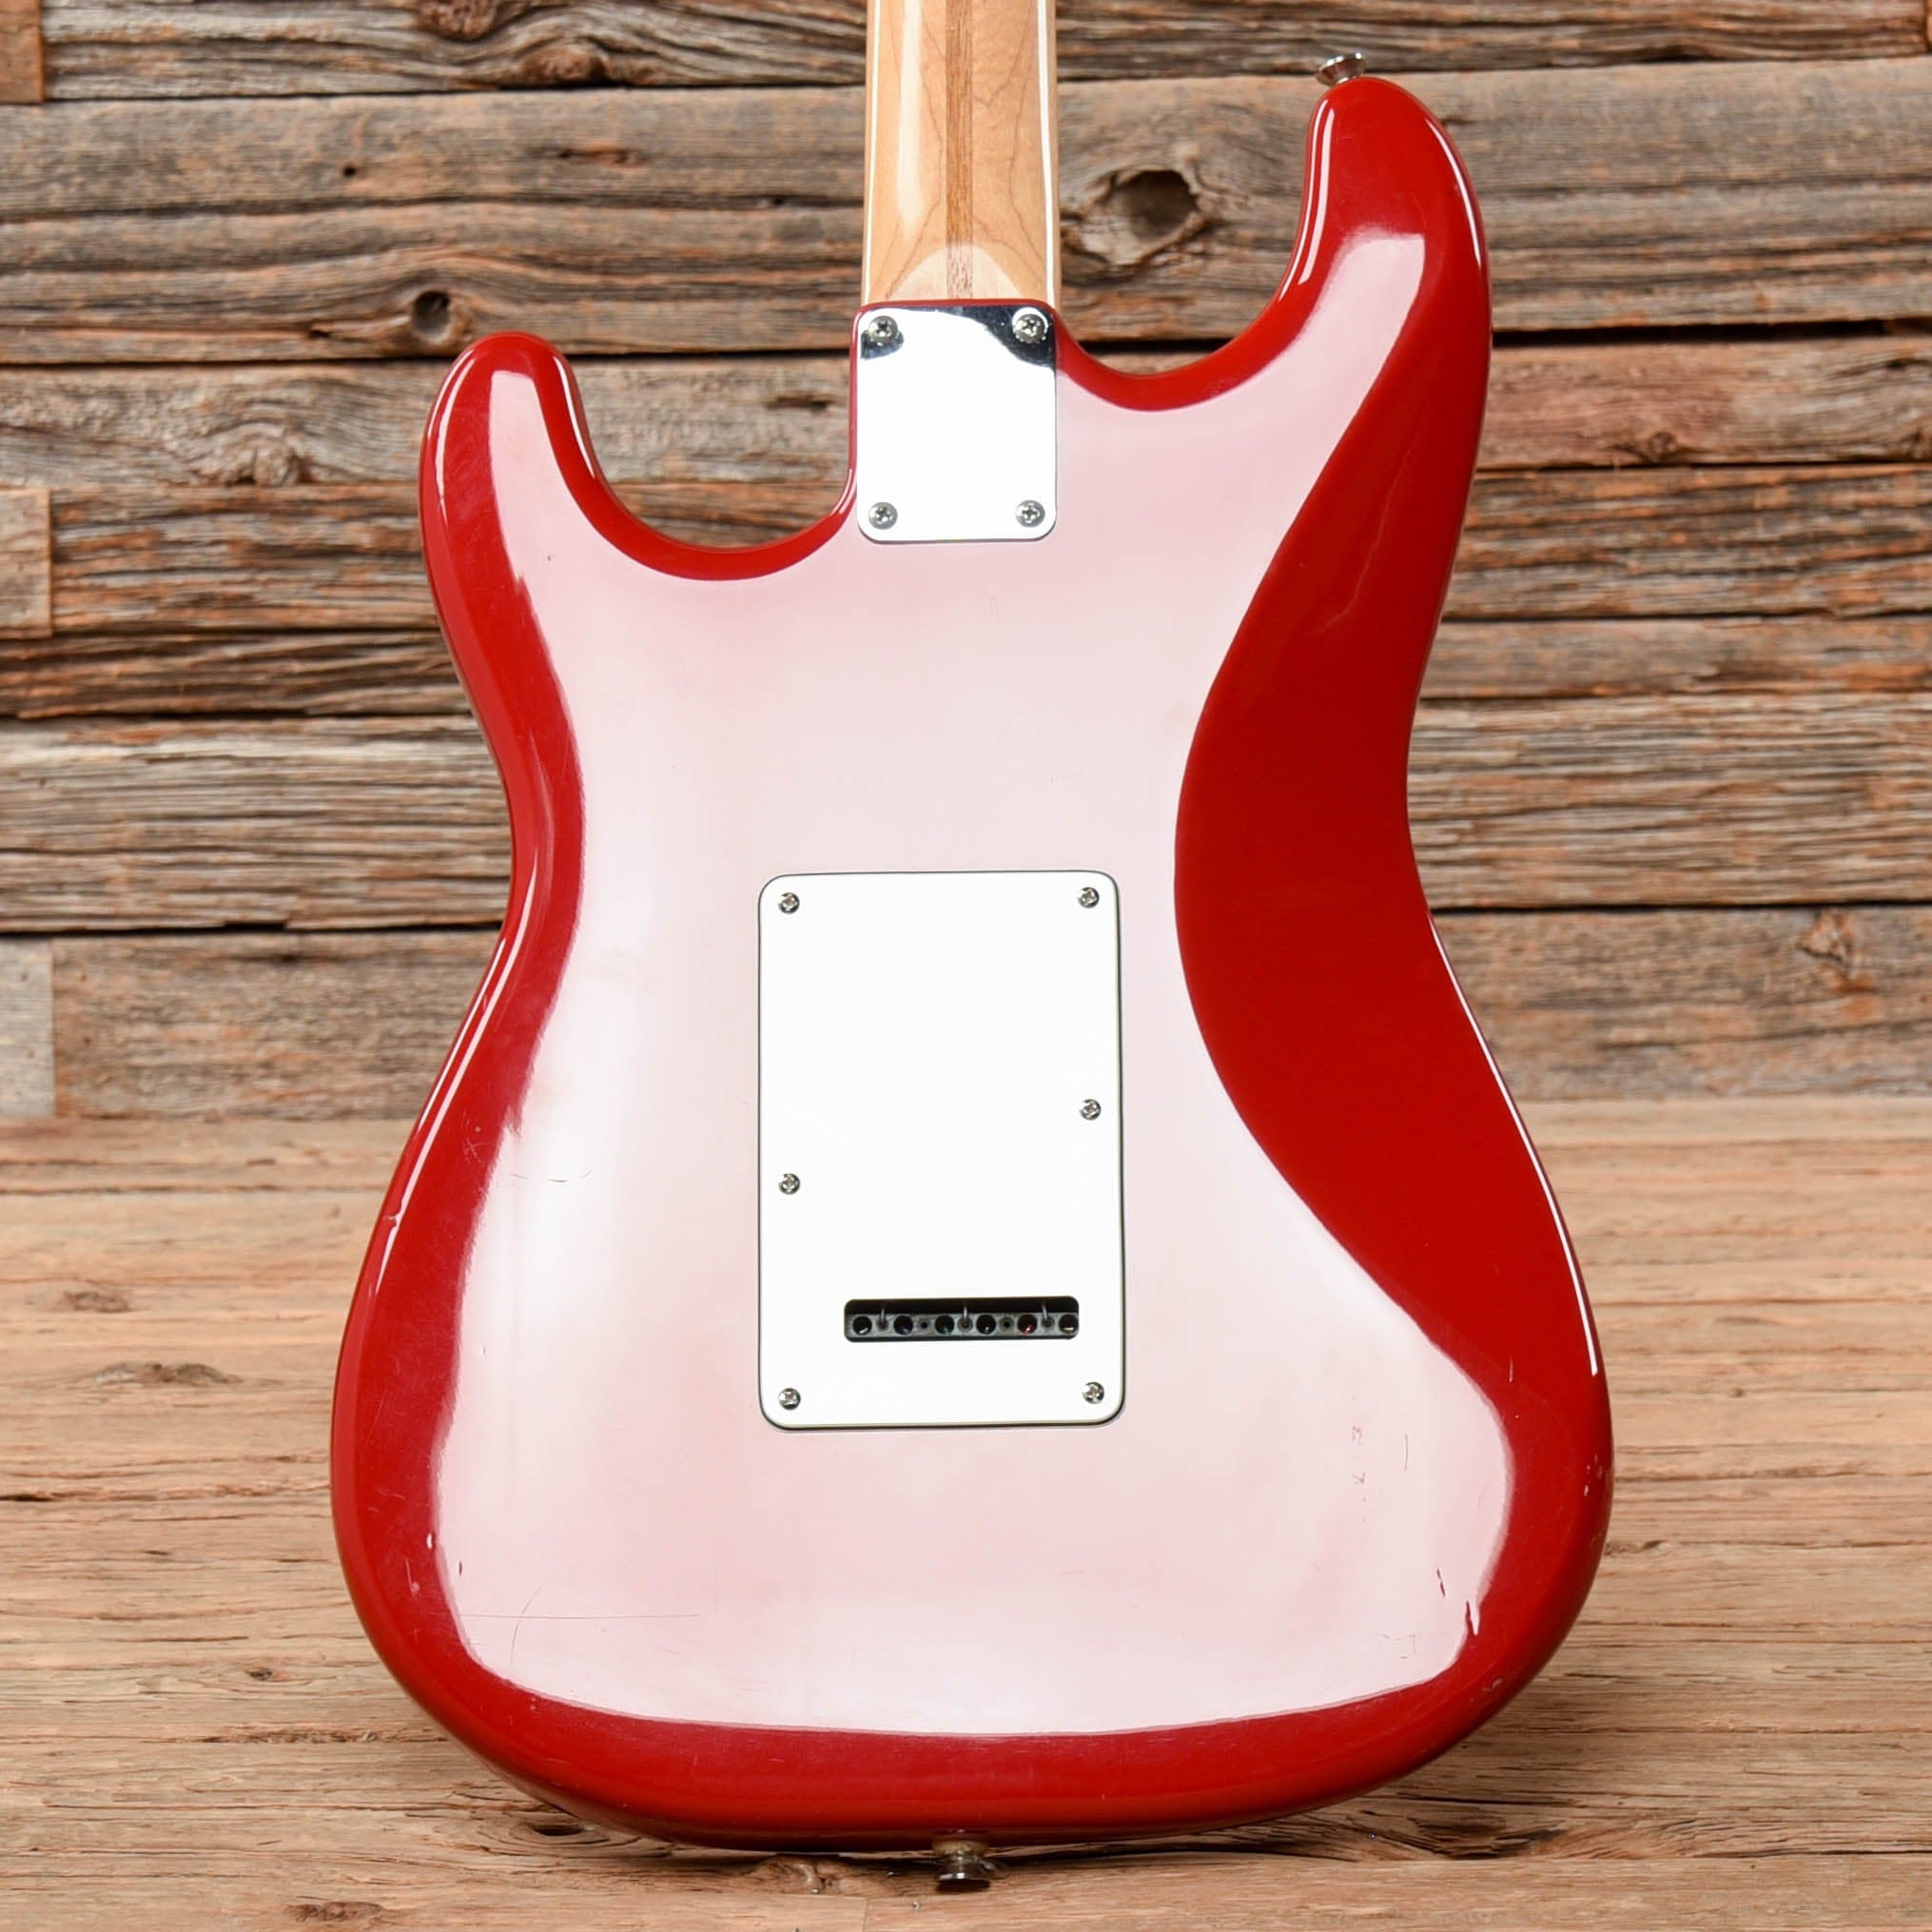 Fender Squier Series Standard Stratocaster Torino Red 1994 